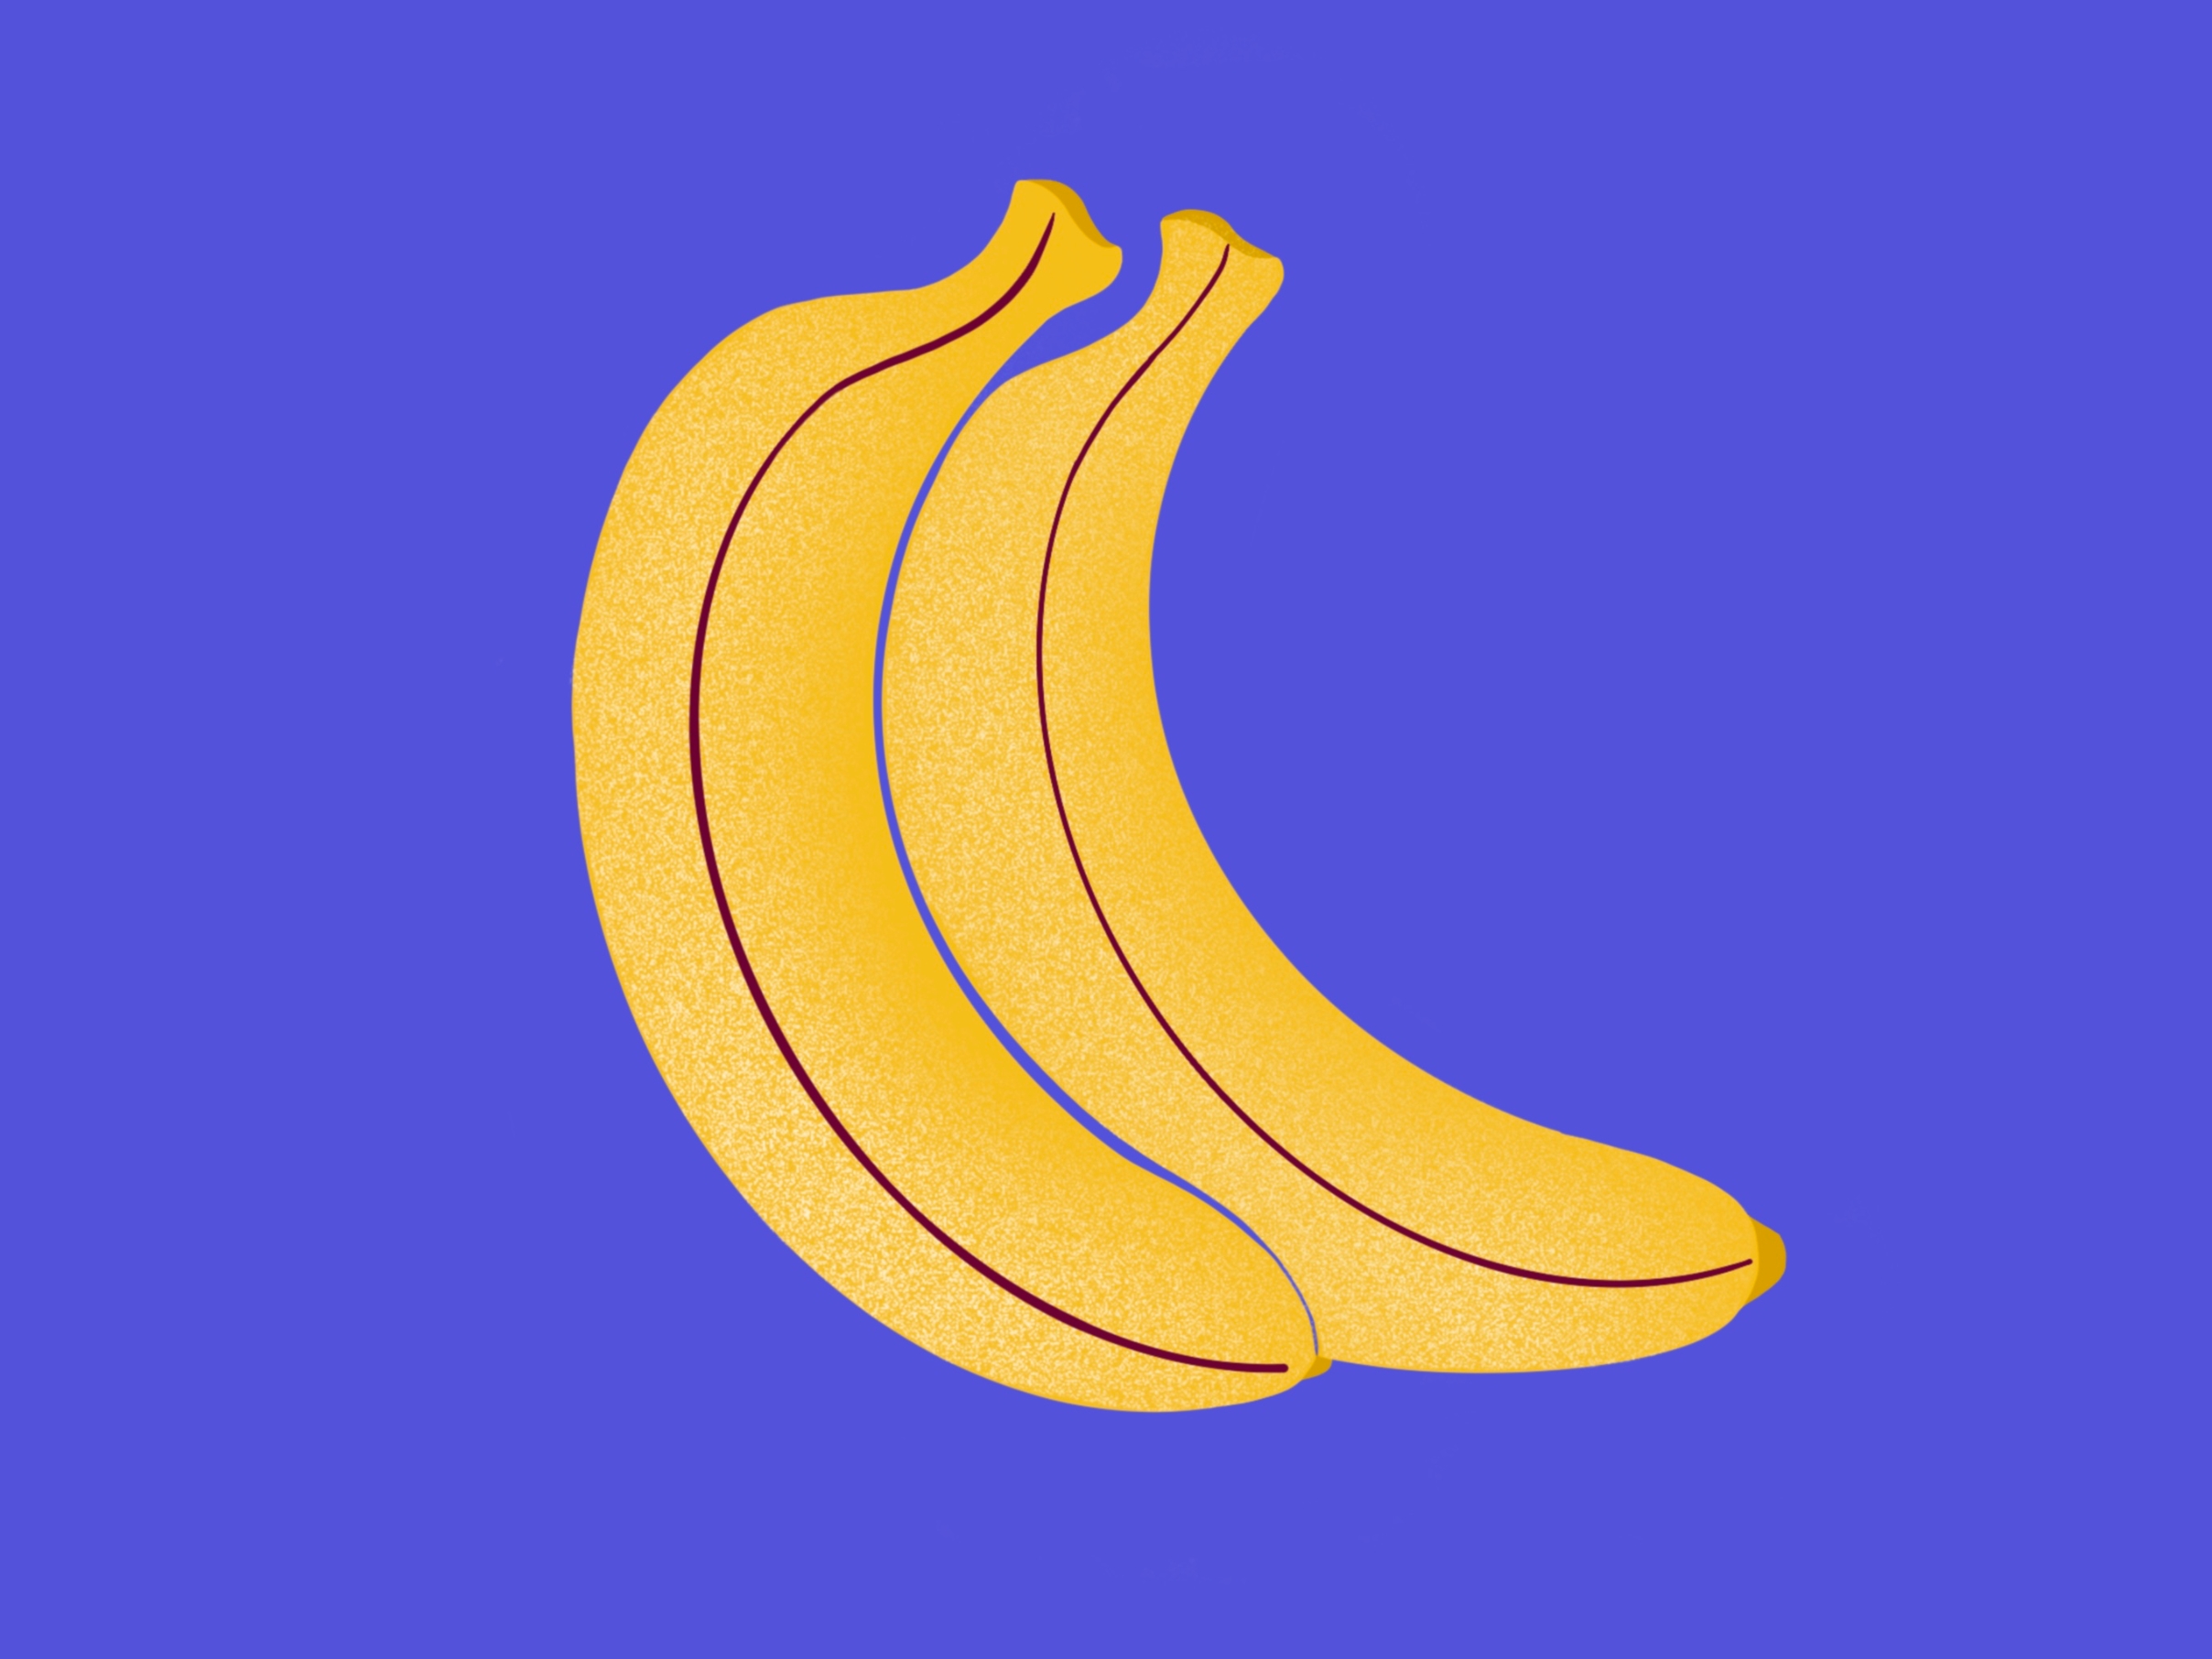 Illustartion of banana